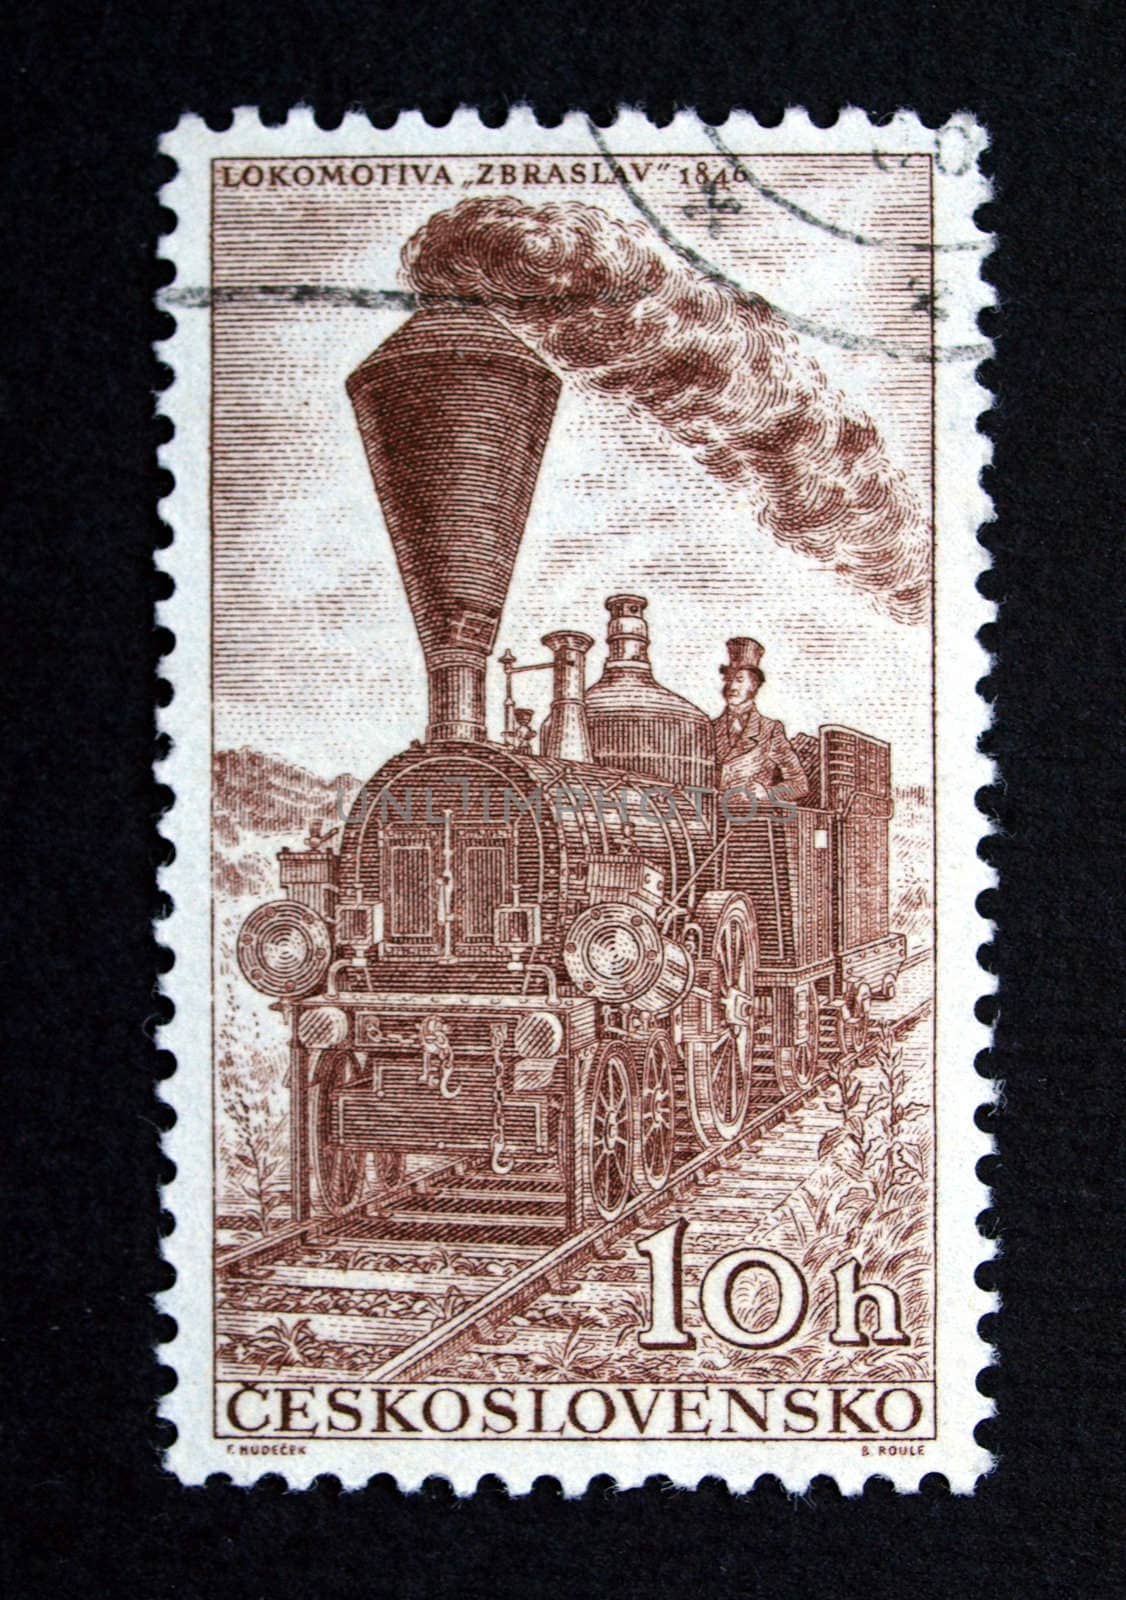 Stamp of the Czech Republic (European Union)